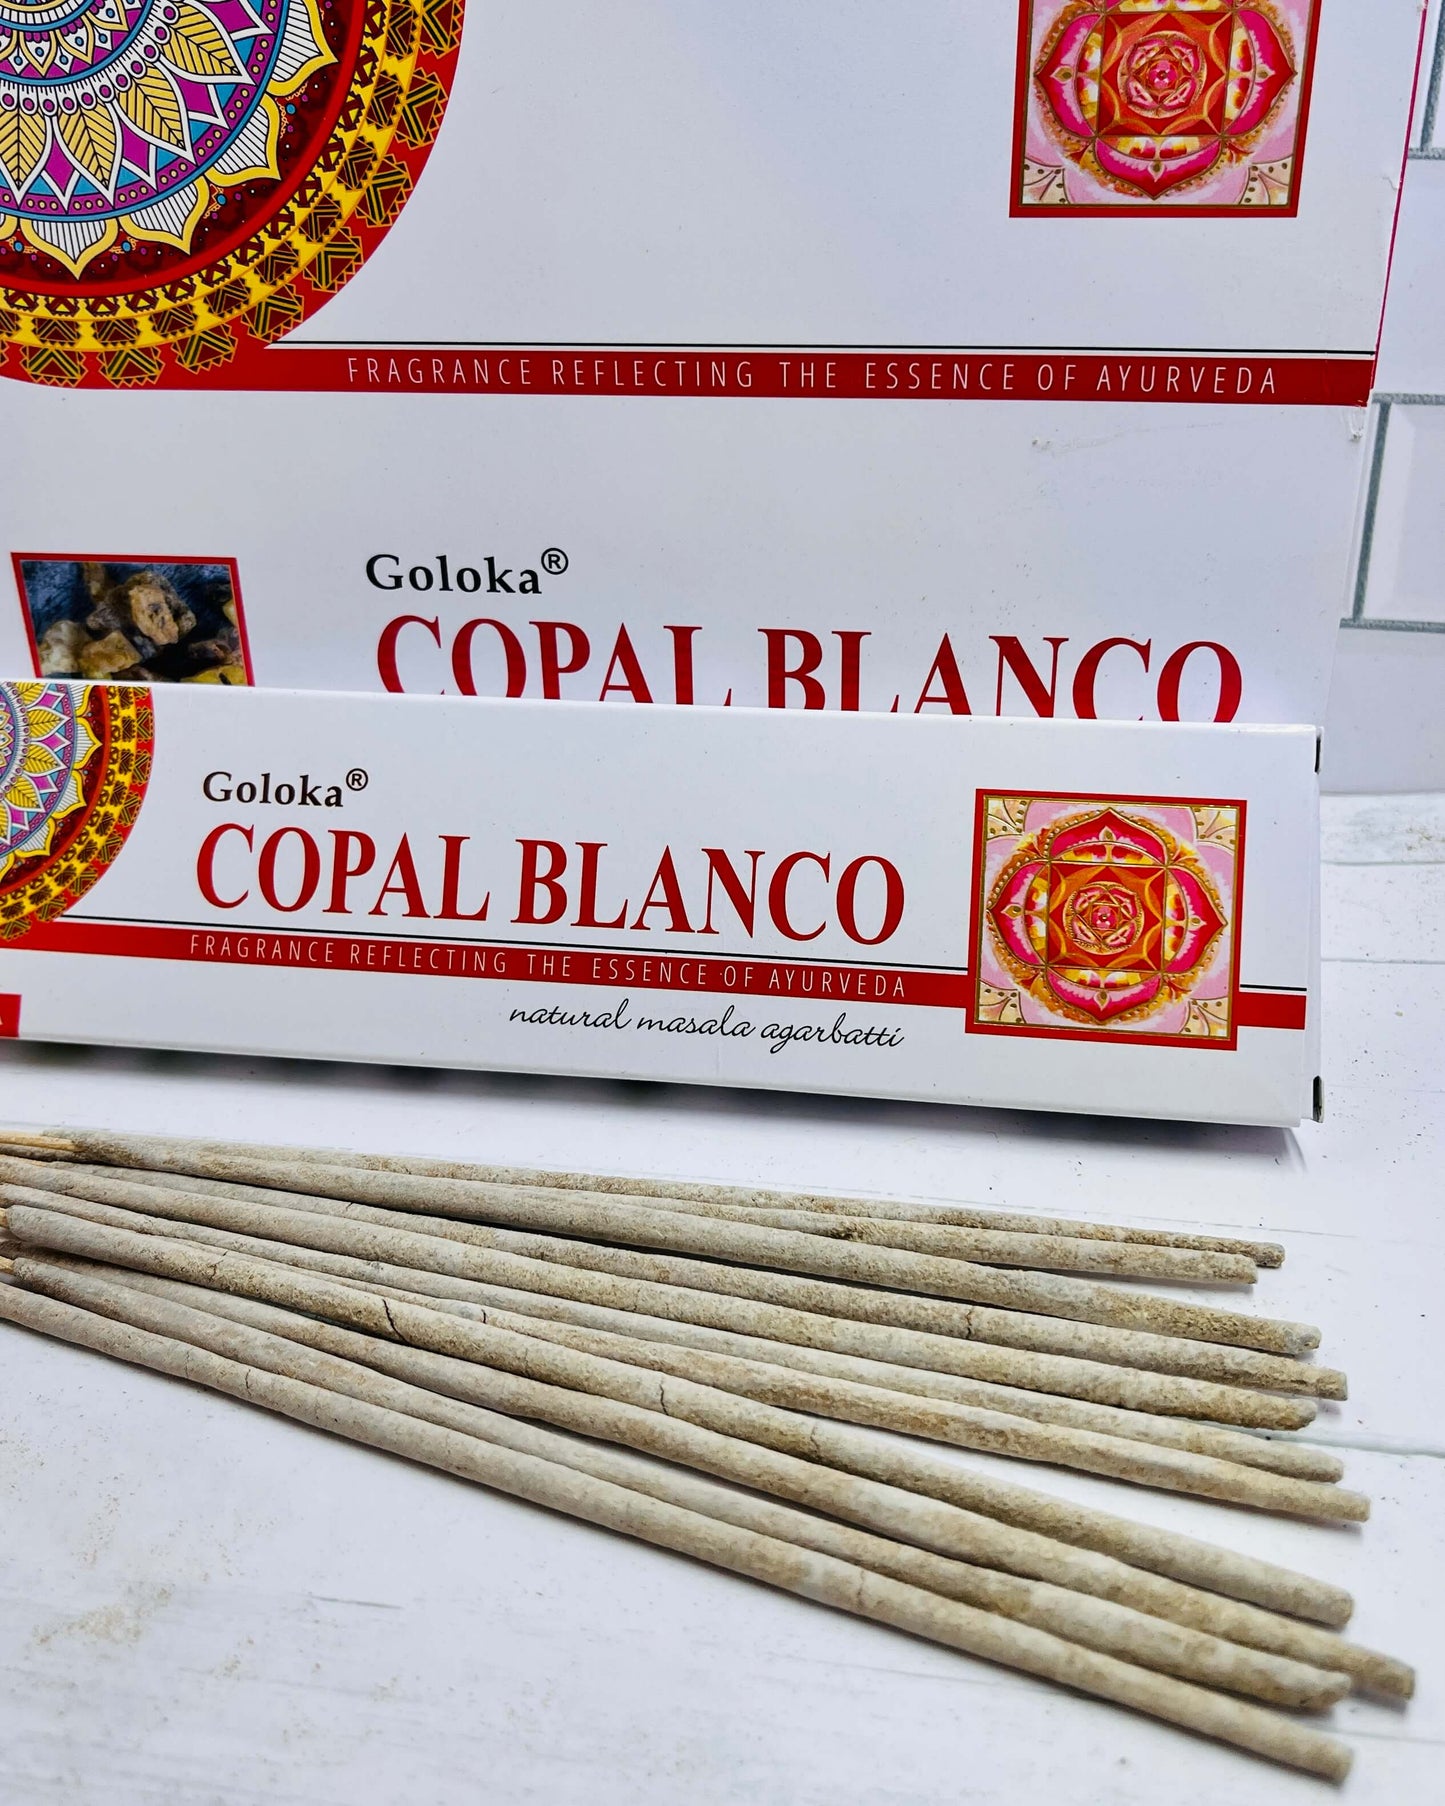 Goloka Copal Blanco (White Copal) incense